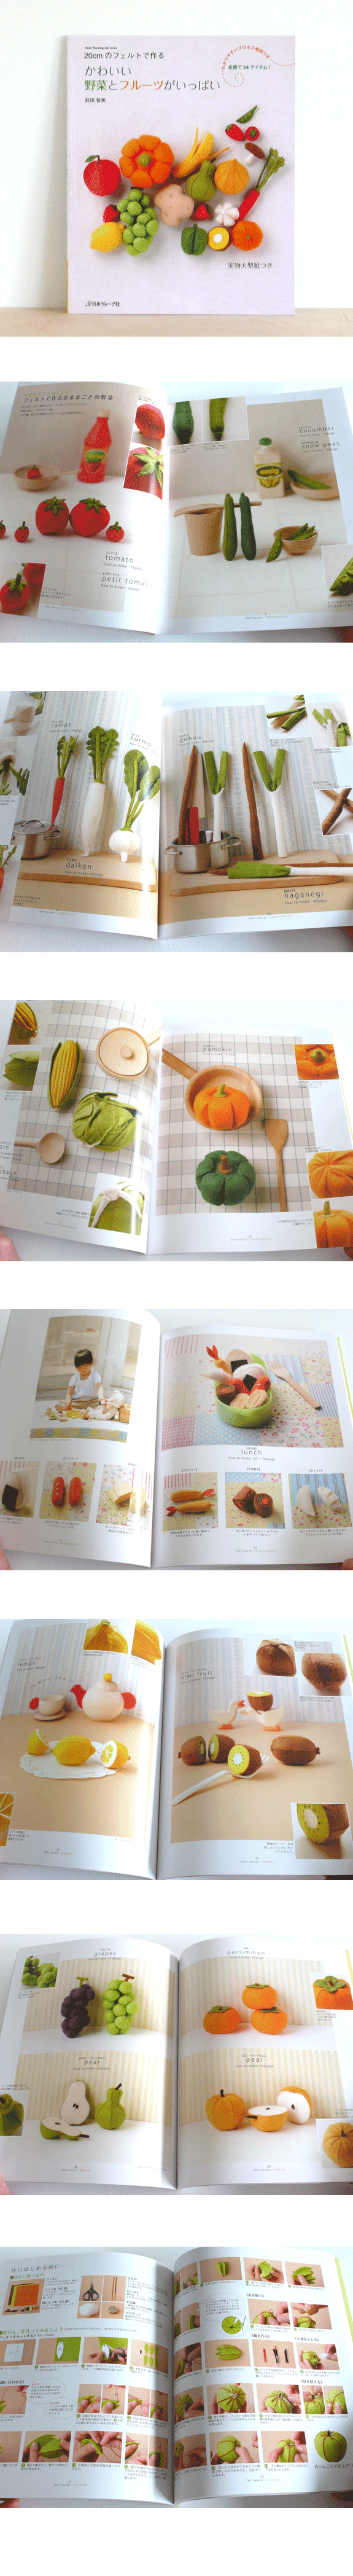 make felt vegetables fruit book japanese [make felt fruit, make felt book, felt craft book]